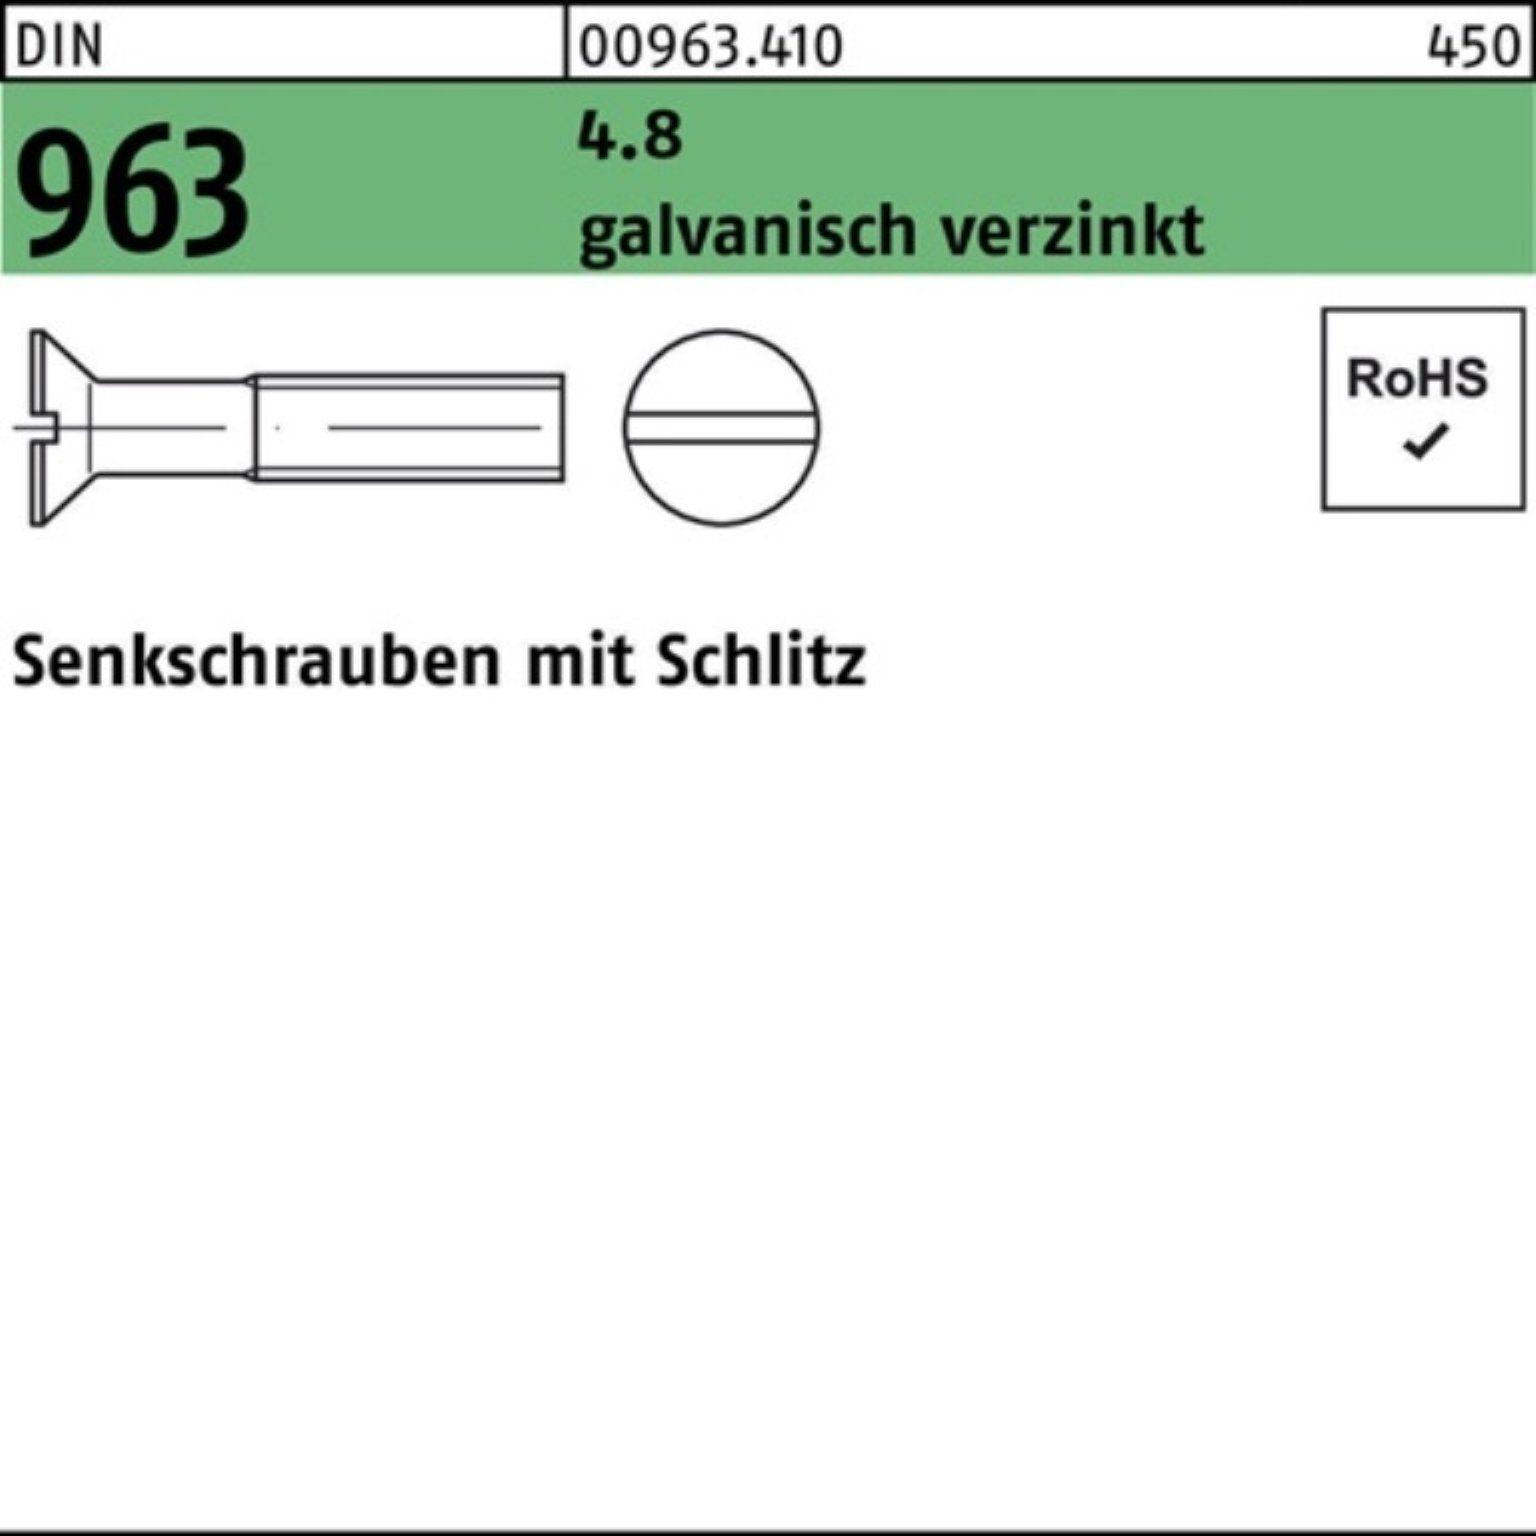 Reyher Senkschraube 200er Senkschraube Schlitz 200 Pack 4.8 10 963 galv.verz. Stü M4x DIN